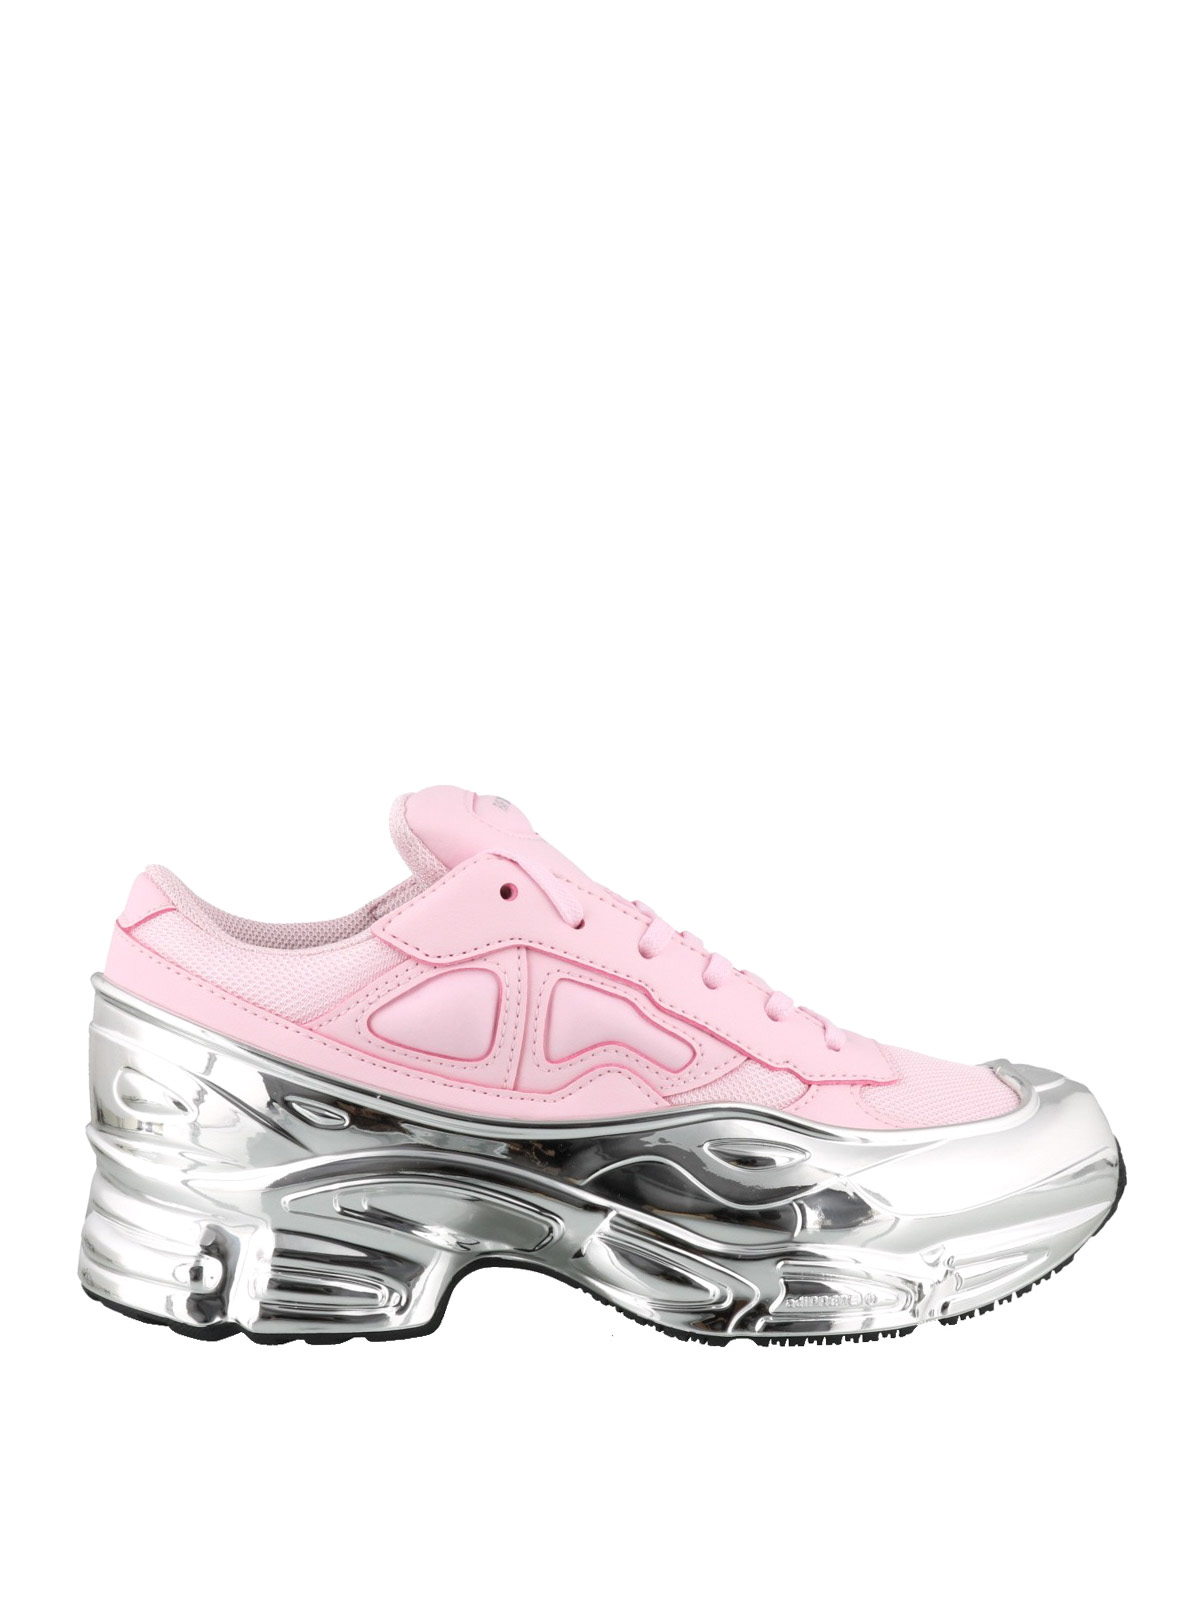 raf simons pink sneakers